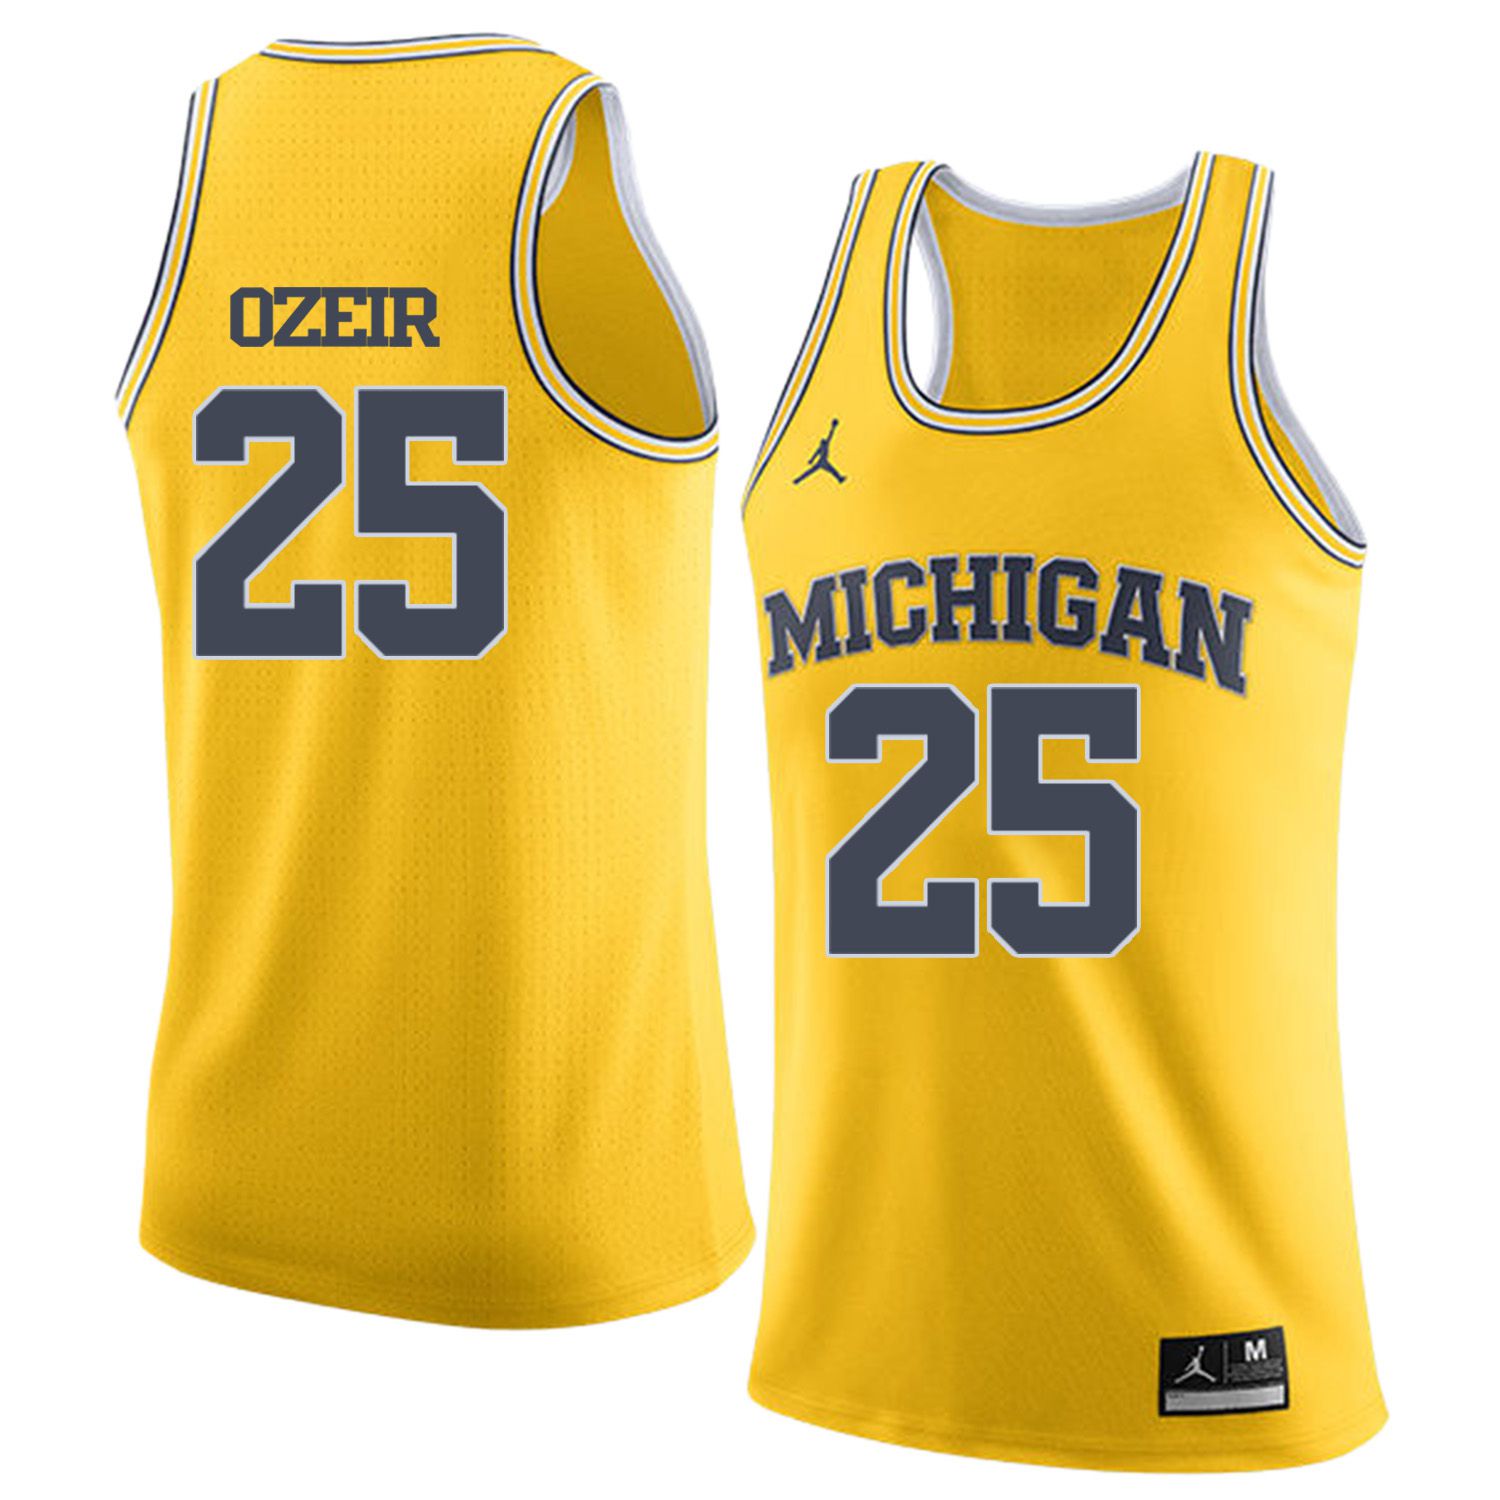 Men Jordan University of Michigan Basketball Yellow 25 Ozeir Customized NCAA Jerseys